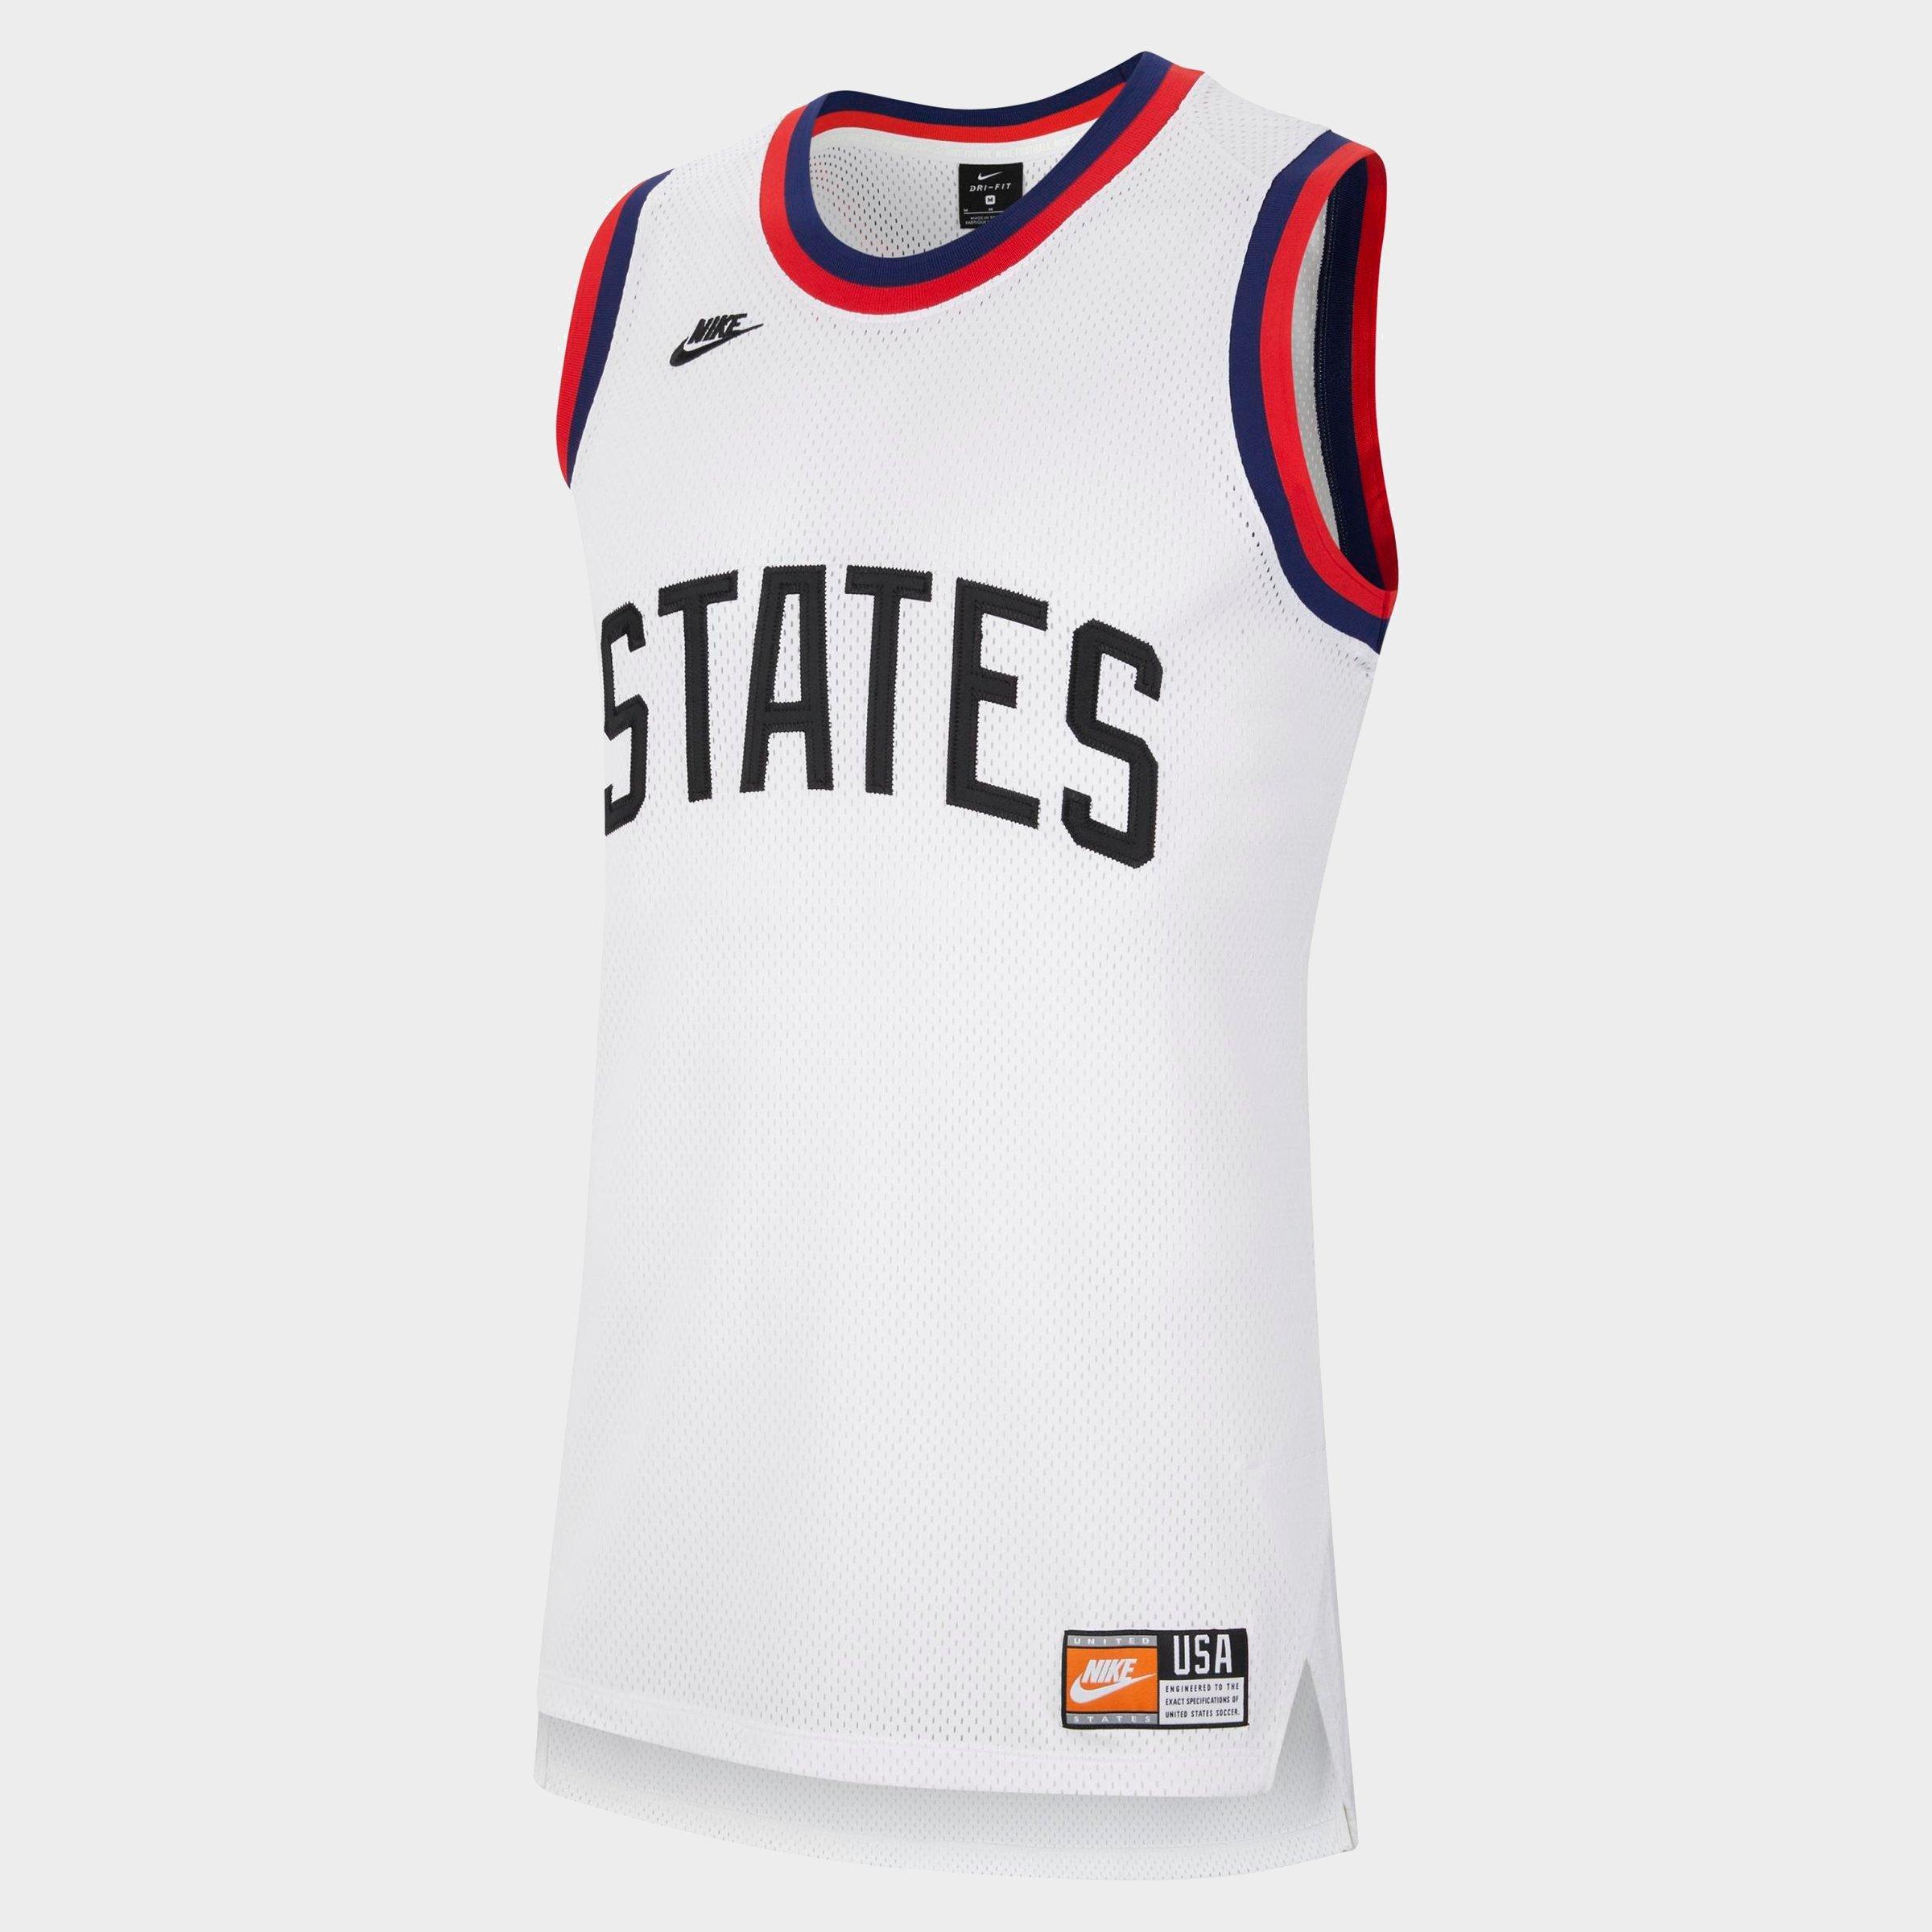 Men's Nike U.S. Mesh Basketball Jersey 